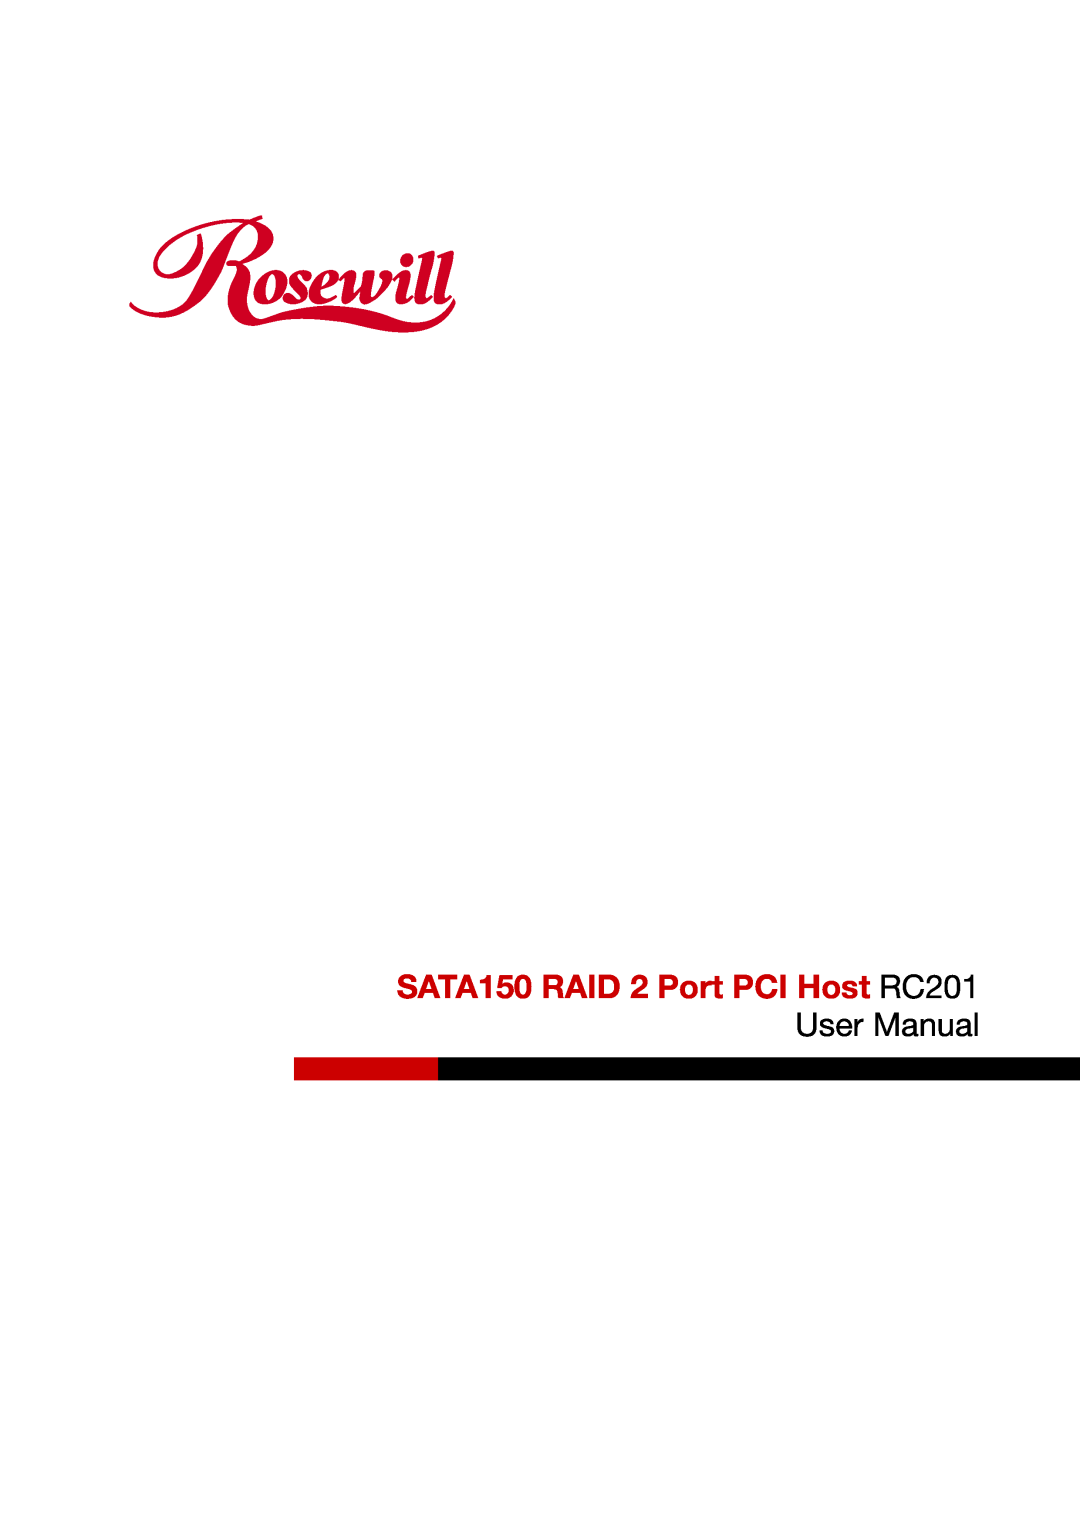 Rosewill user manual SATA150 RAID 2 Port PCI Host RC201 